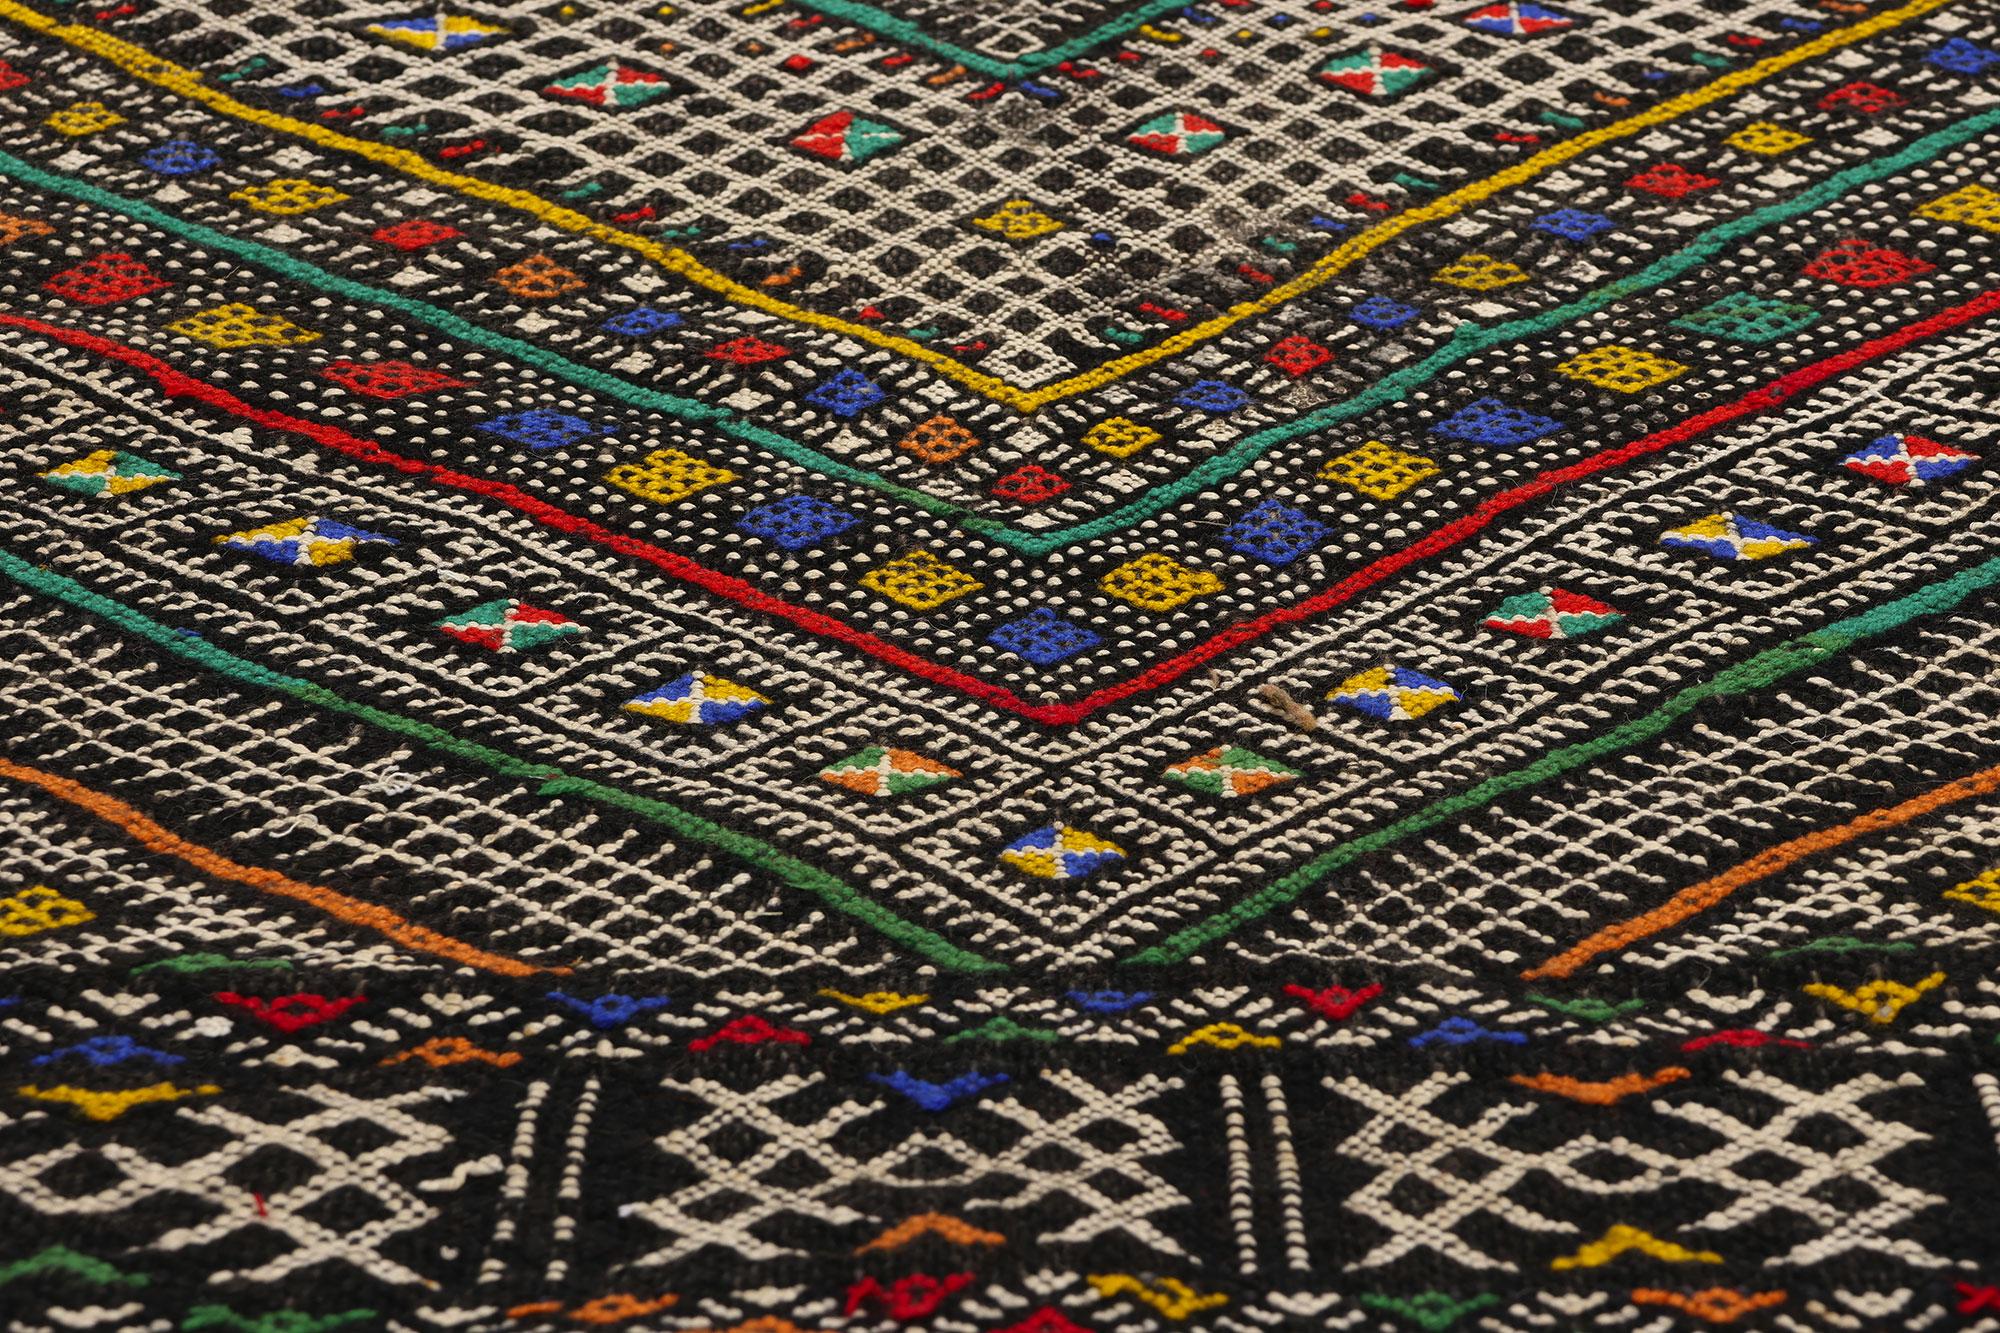 20th Century Midcentury Bohemian Vintage Moroccan Zemmour Kilim Berber Rug, 03'09 x 20'01 For Sale